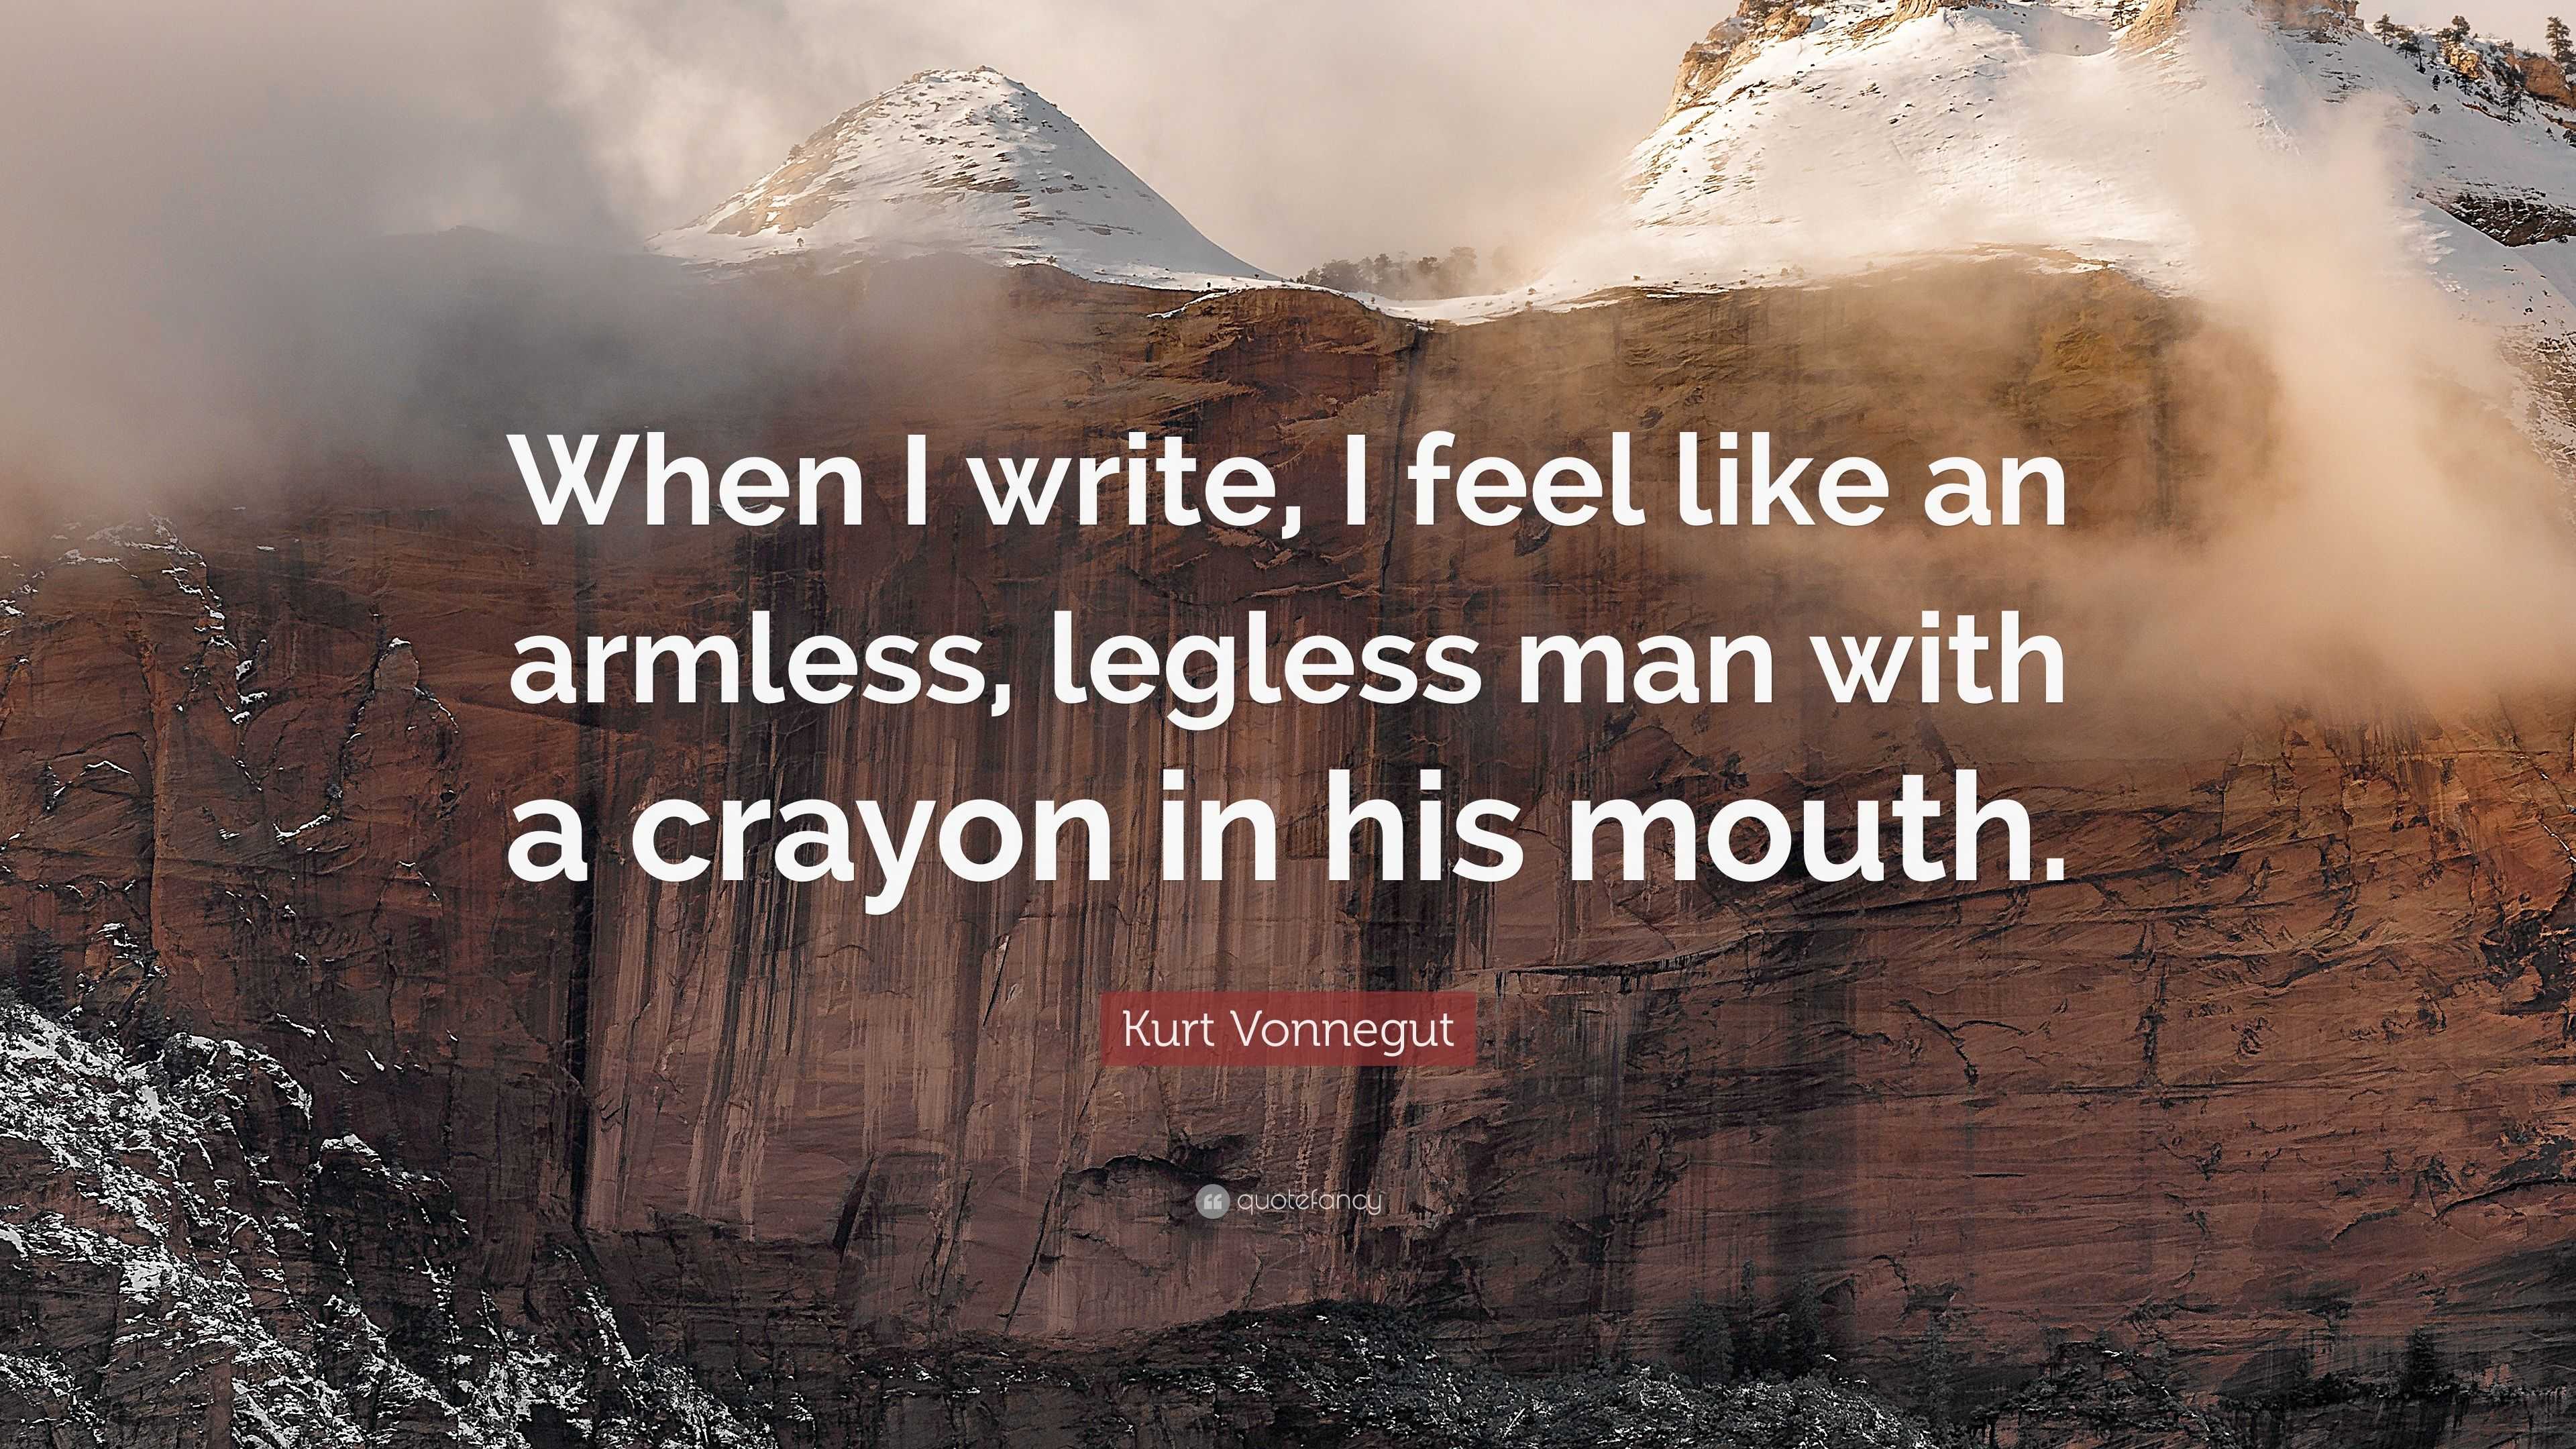 Kurt Vonnegut Quote: “When I write, I feel like an armless, legless man